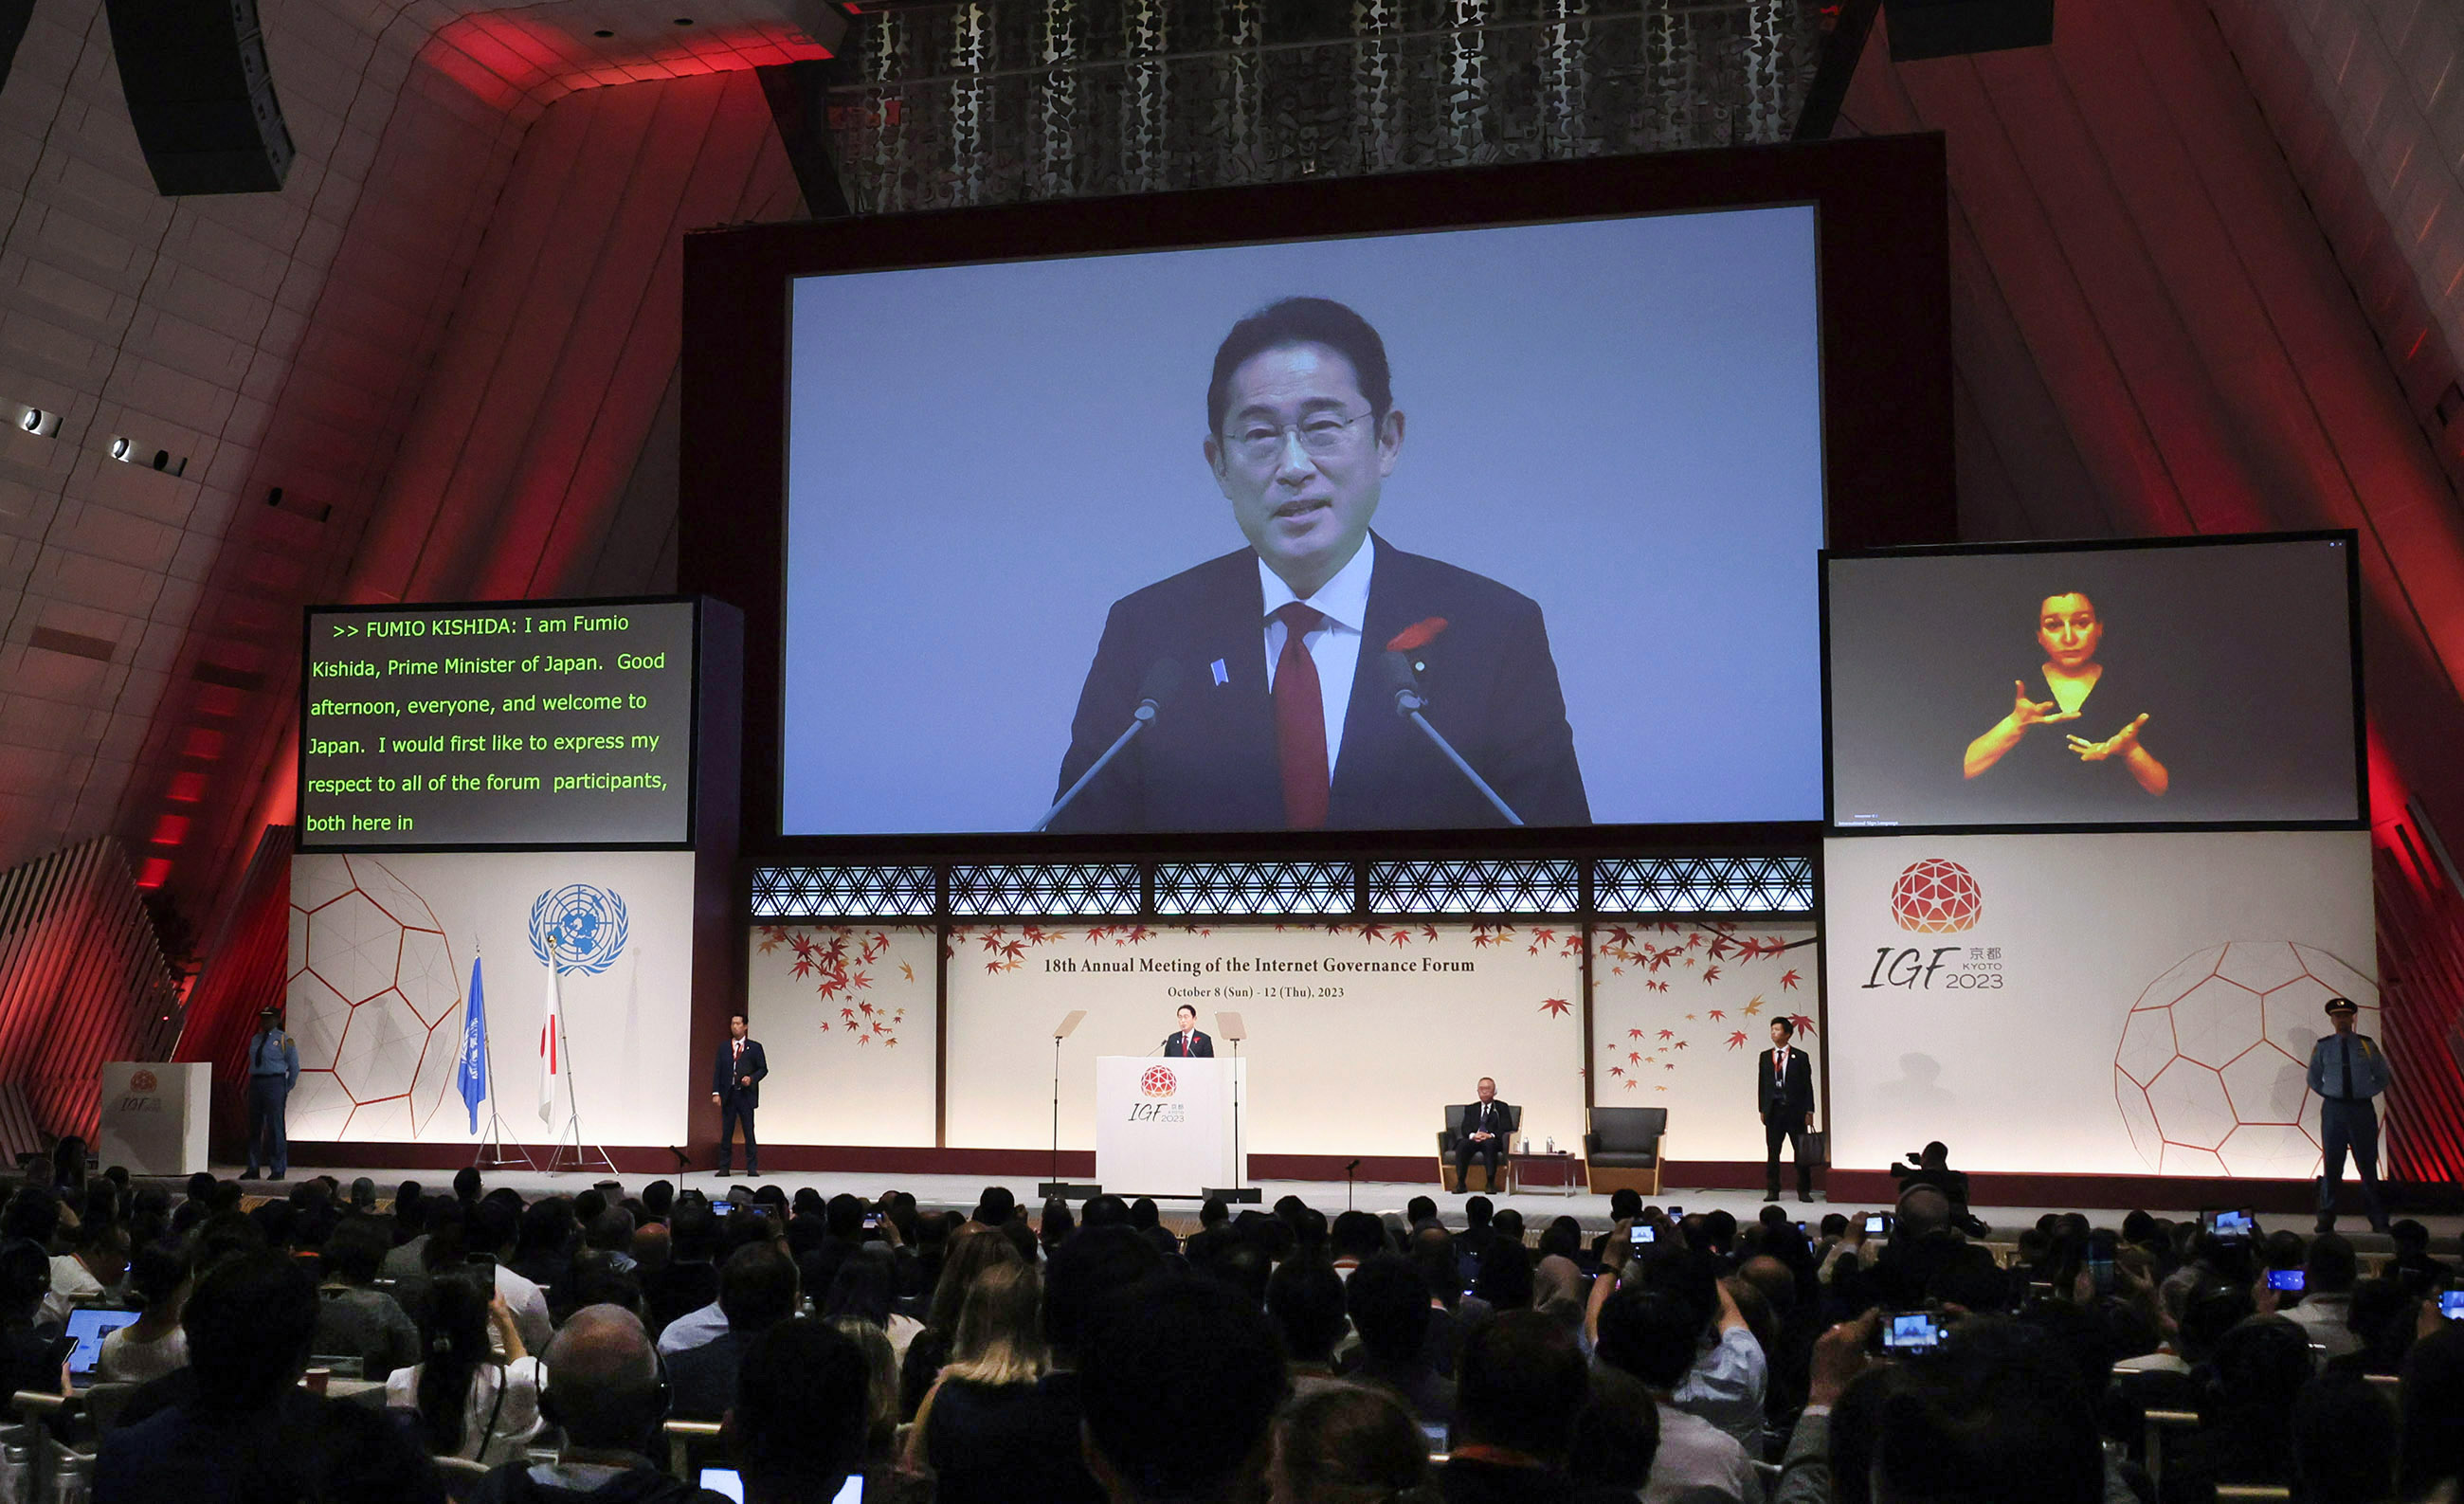 Internet Governance Forum 2023: Opening Ceremony